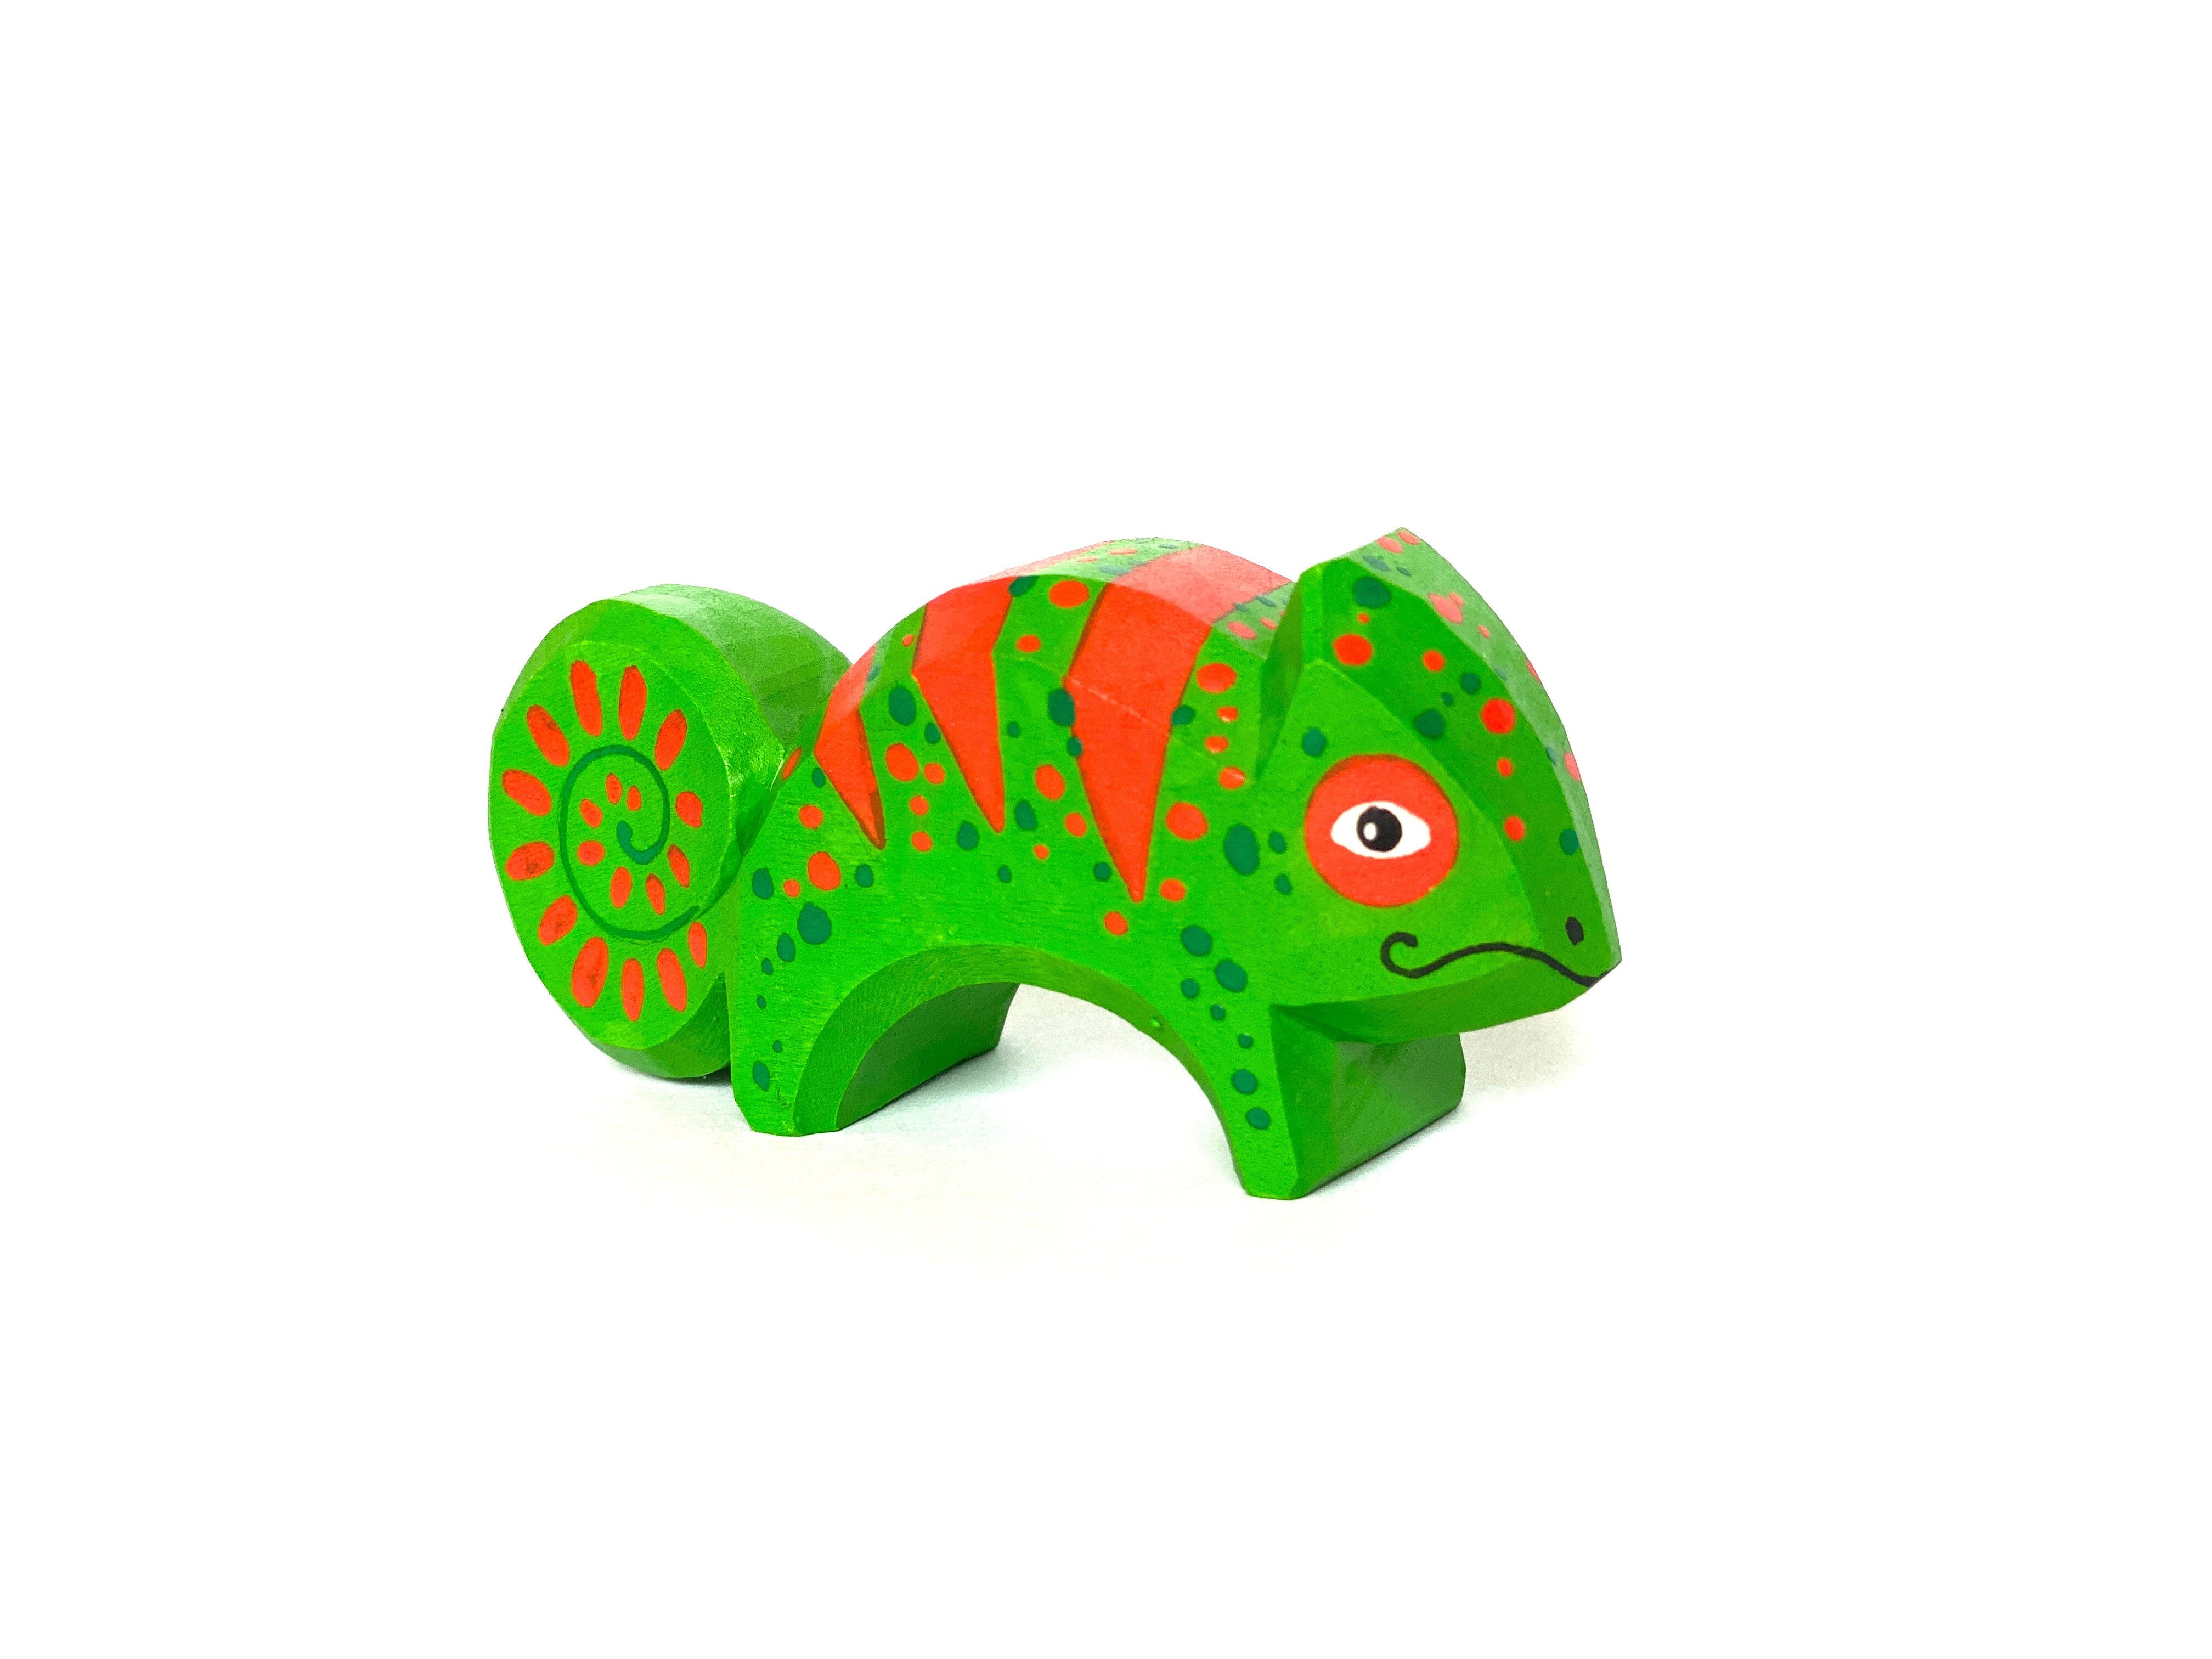 Safari Ltd. Veiled Chameleon Baby Figurine - Detailed 6.75 Plastic Model  Figure - Fun Educational Play Toy for Boys, Girls & Kids Ages 18M+